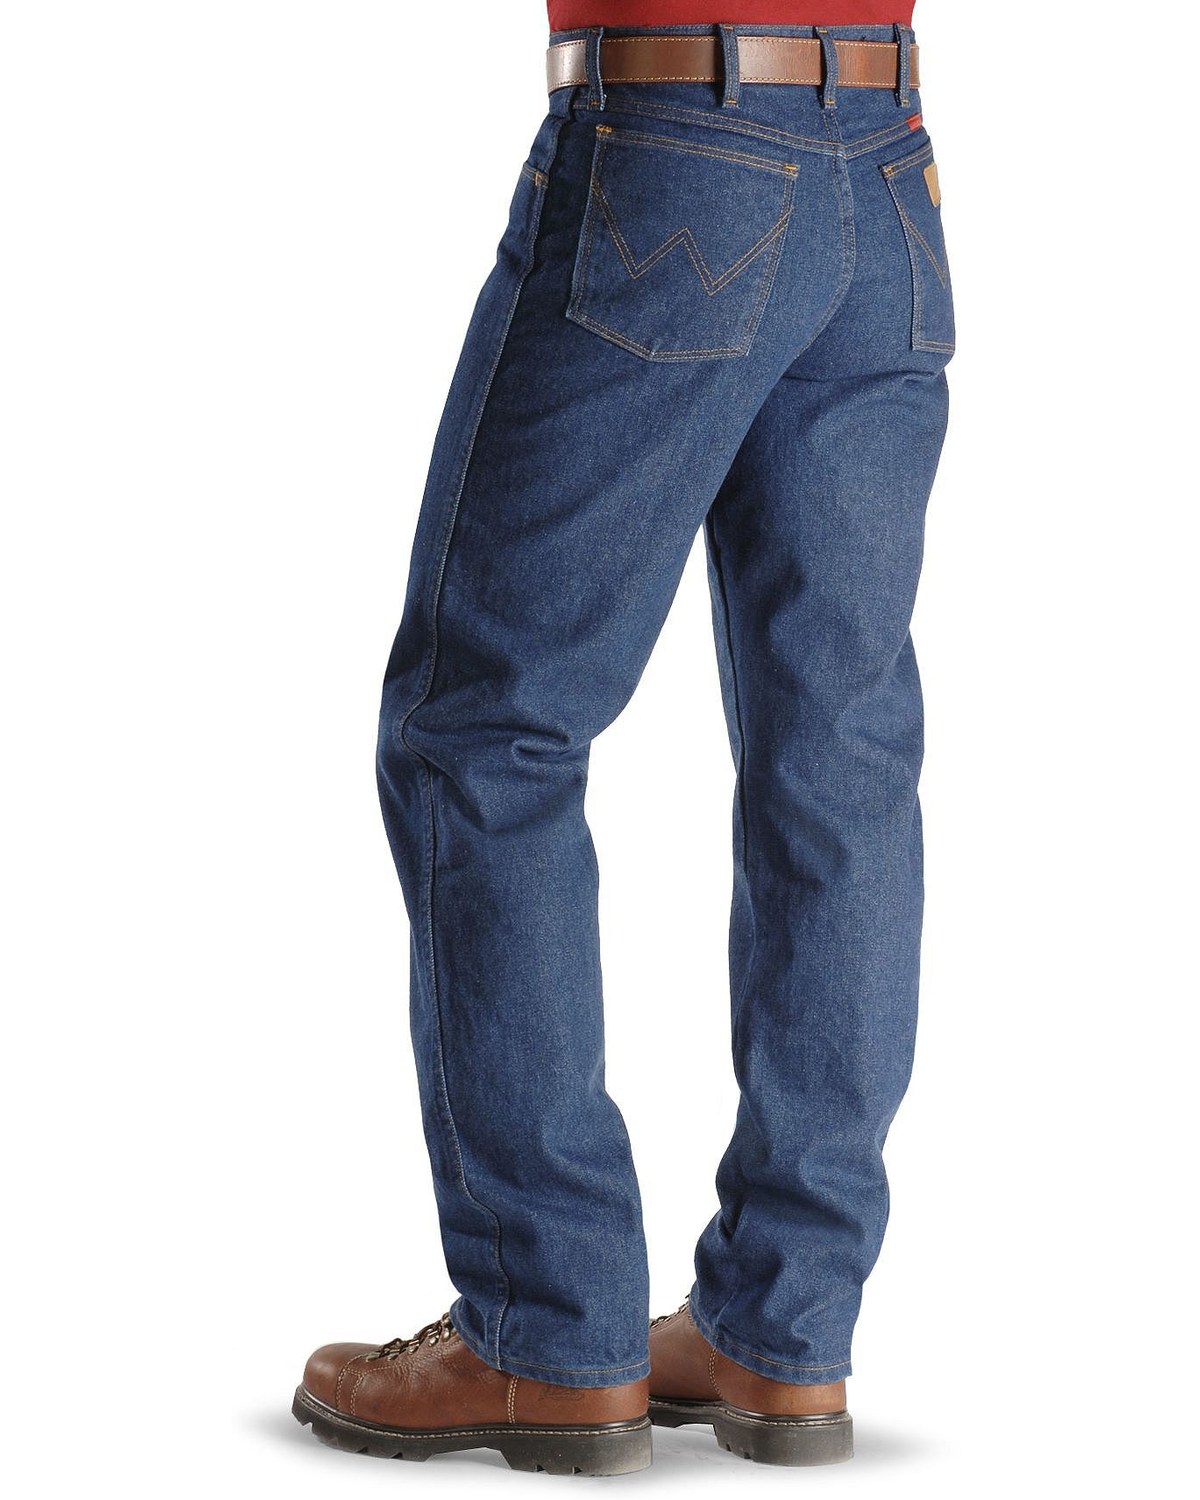 Wrangler Men's Relaxed Flame Resistant Jeans